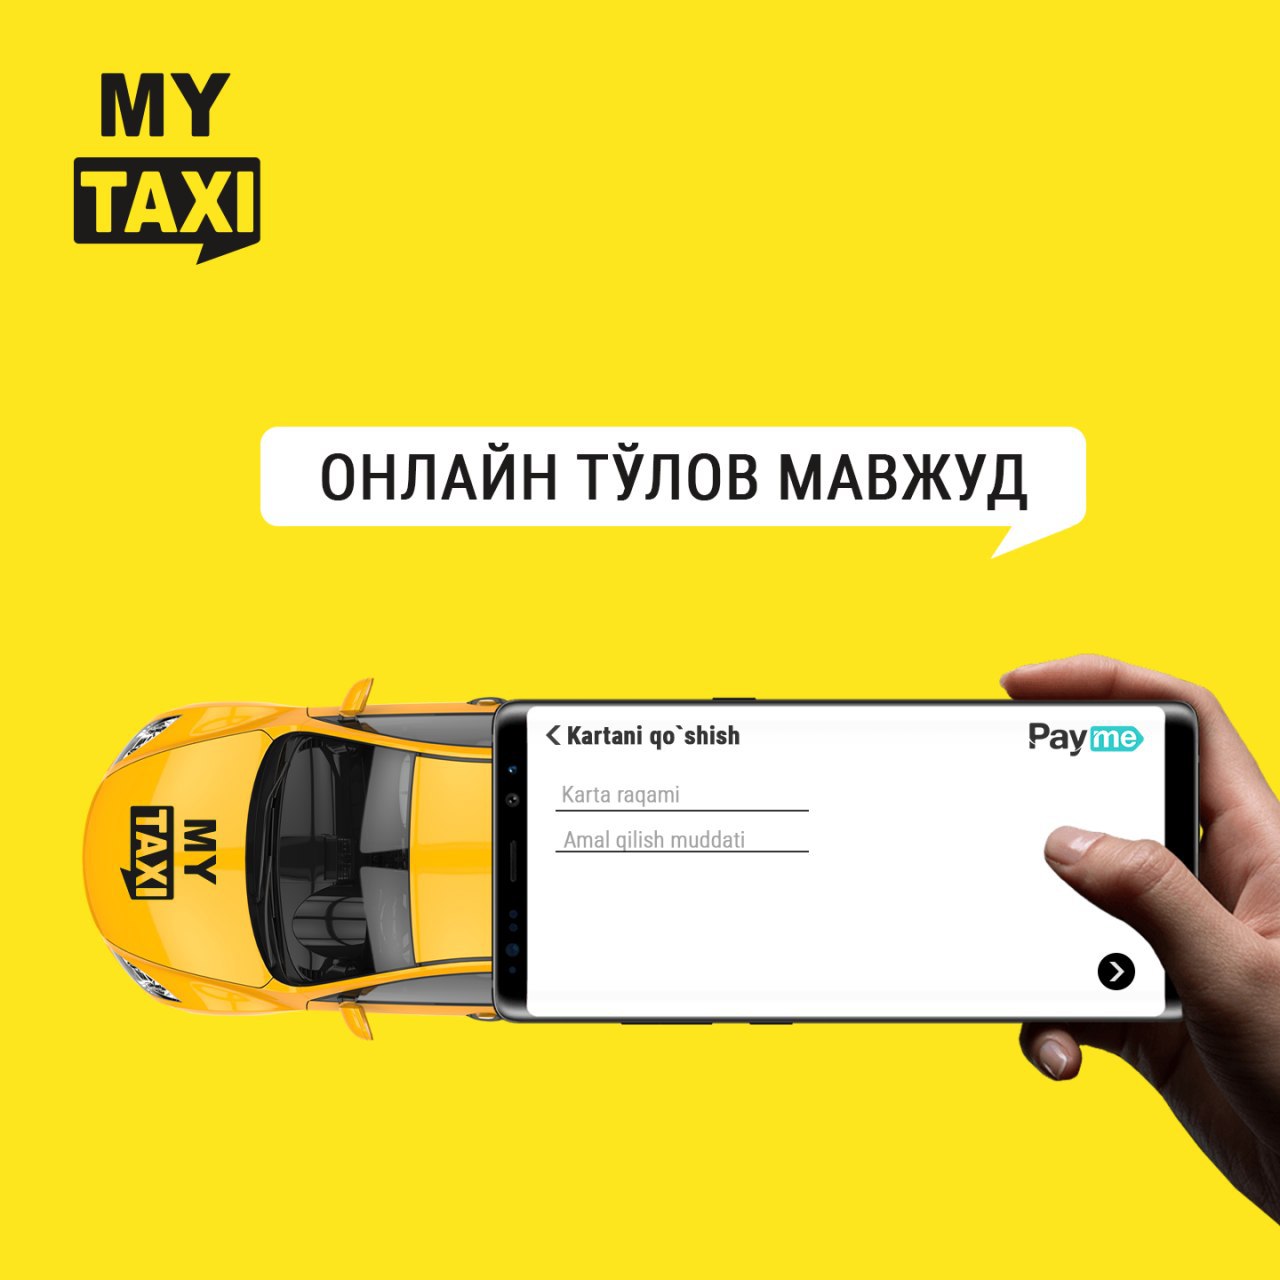 Вай такси телефон. Такси mytaxi. Май такси. Mytaxi Ташкент. Mytaxi logo.